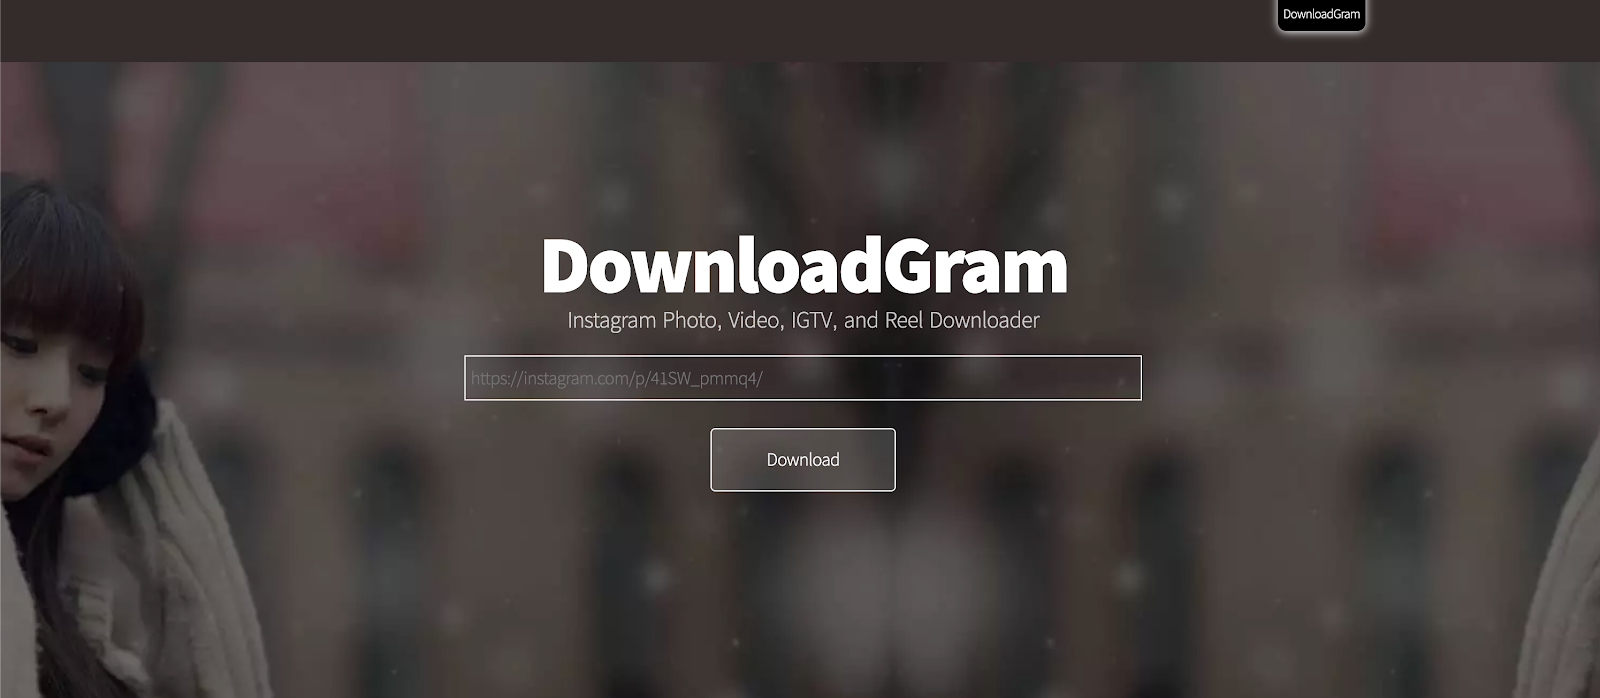 Download gram download windows 10 update